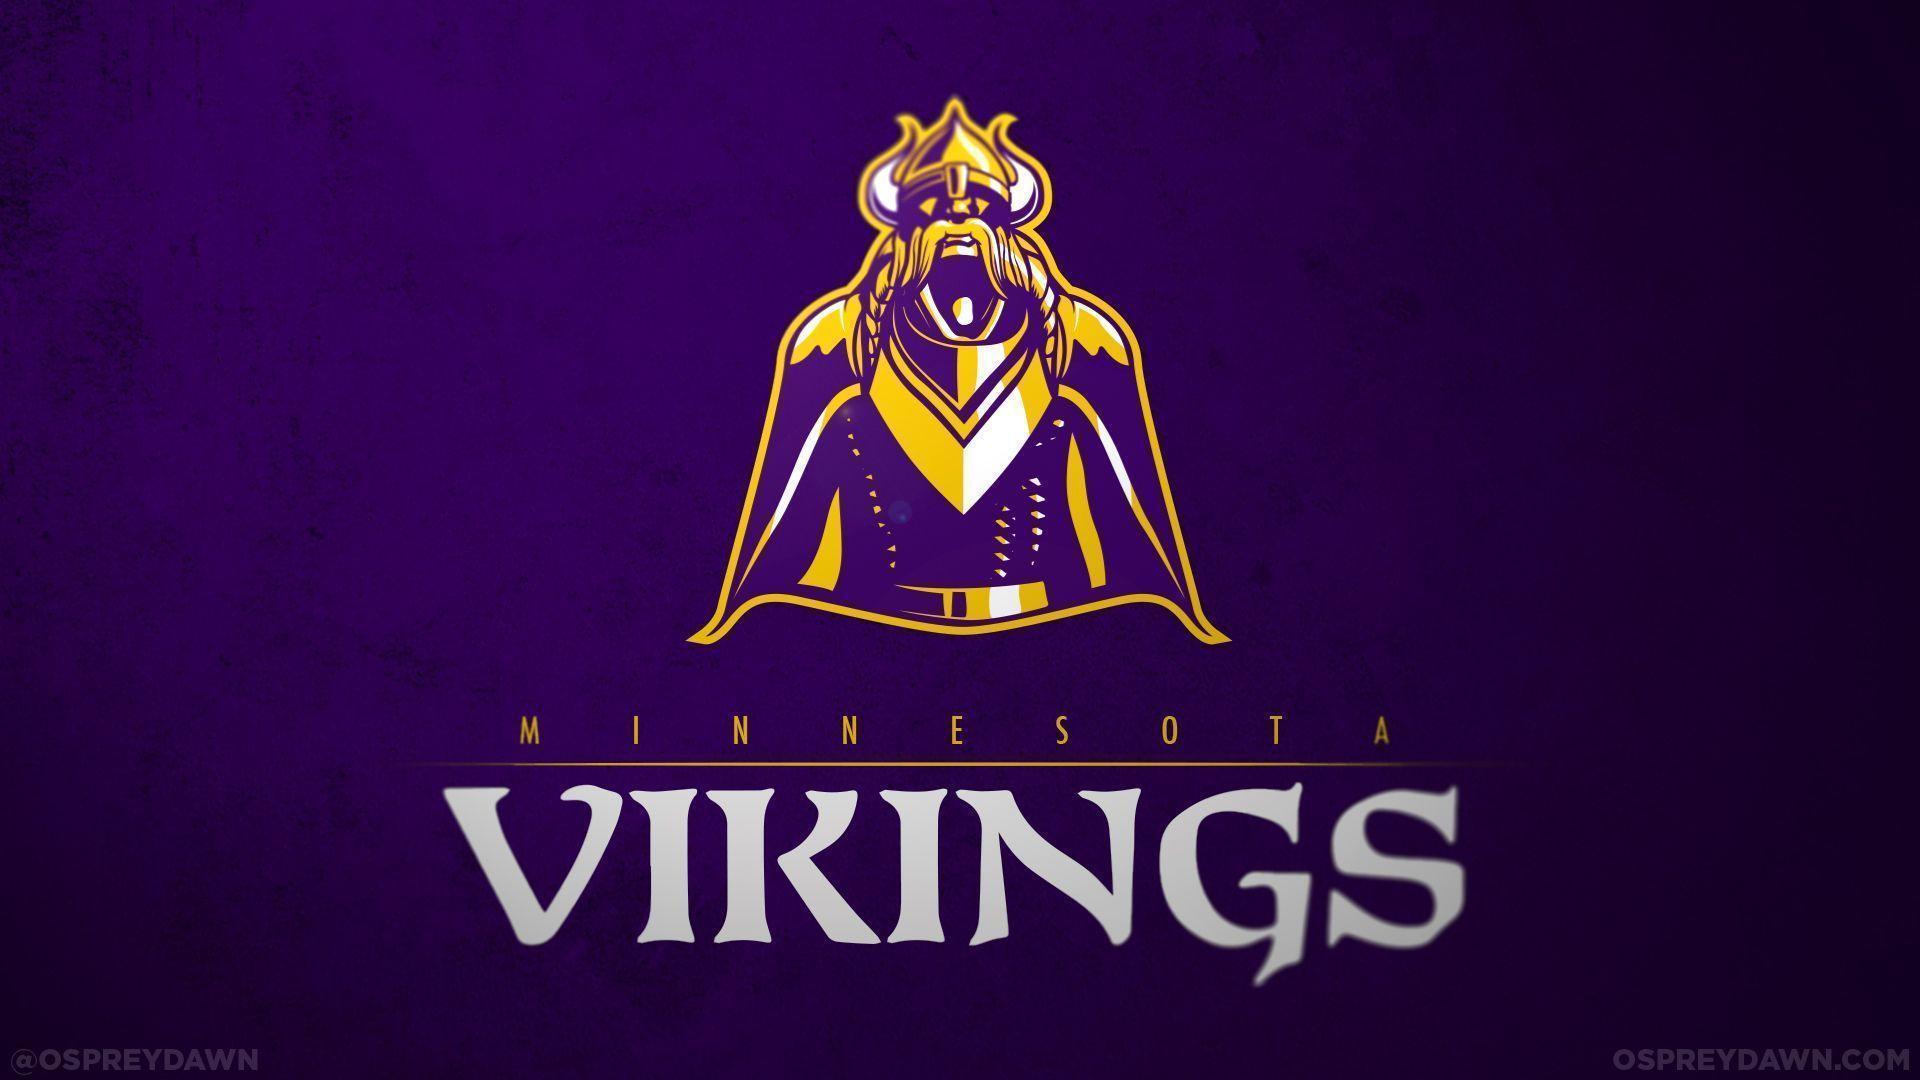 Minnesota Vikings Wallpaper and Background